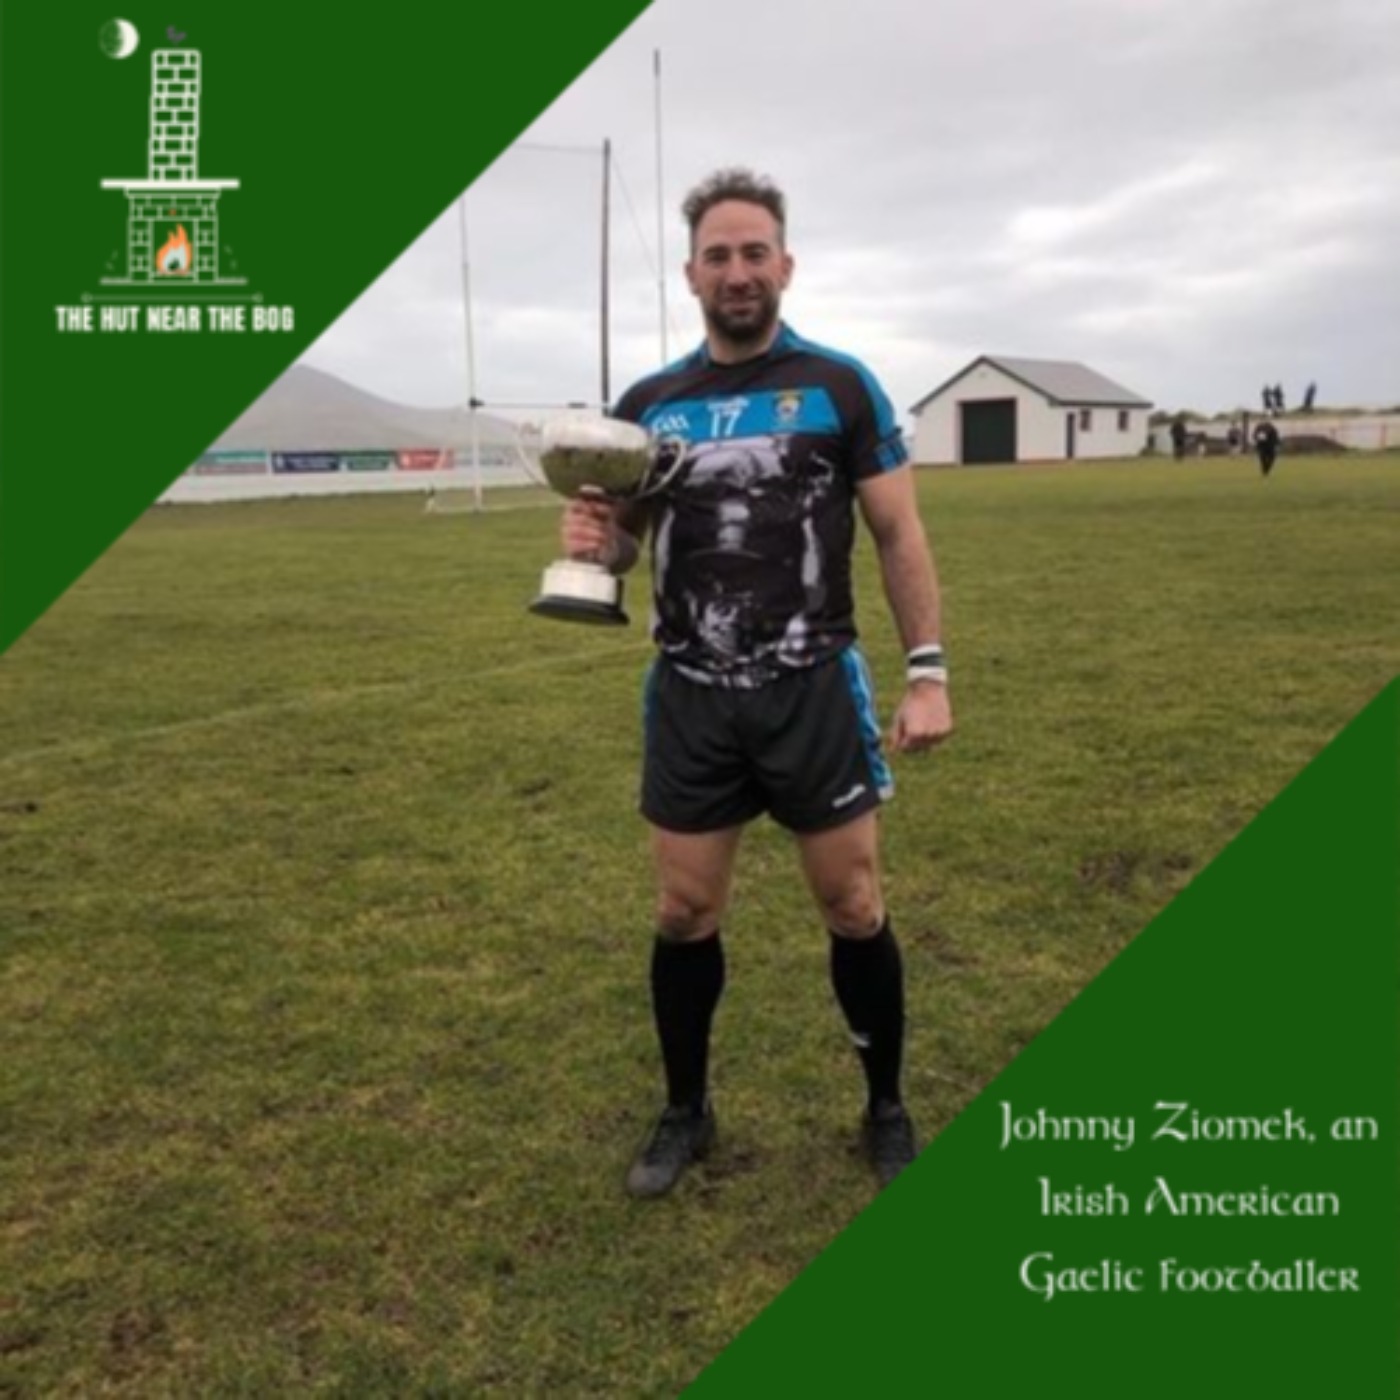 Johnny Ziomek, an Irish American Gaelic footballer [full interview]